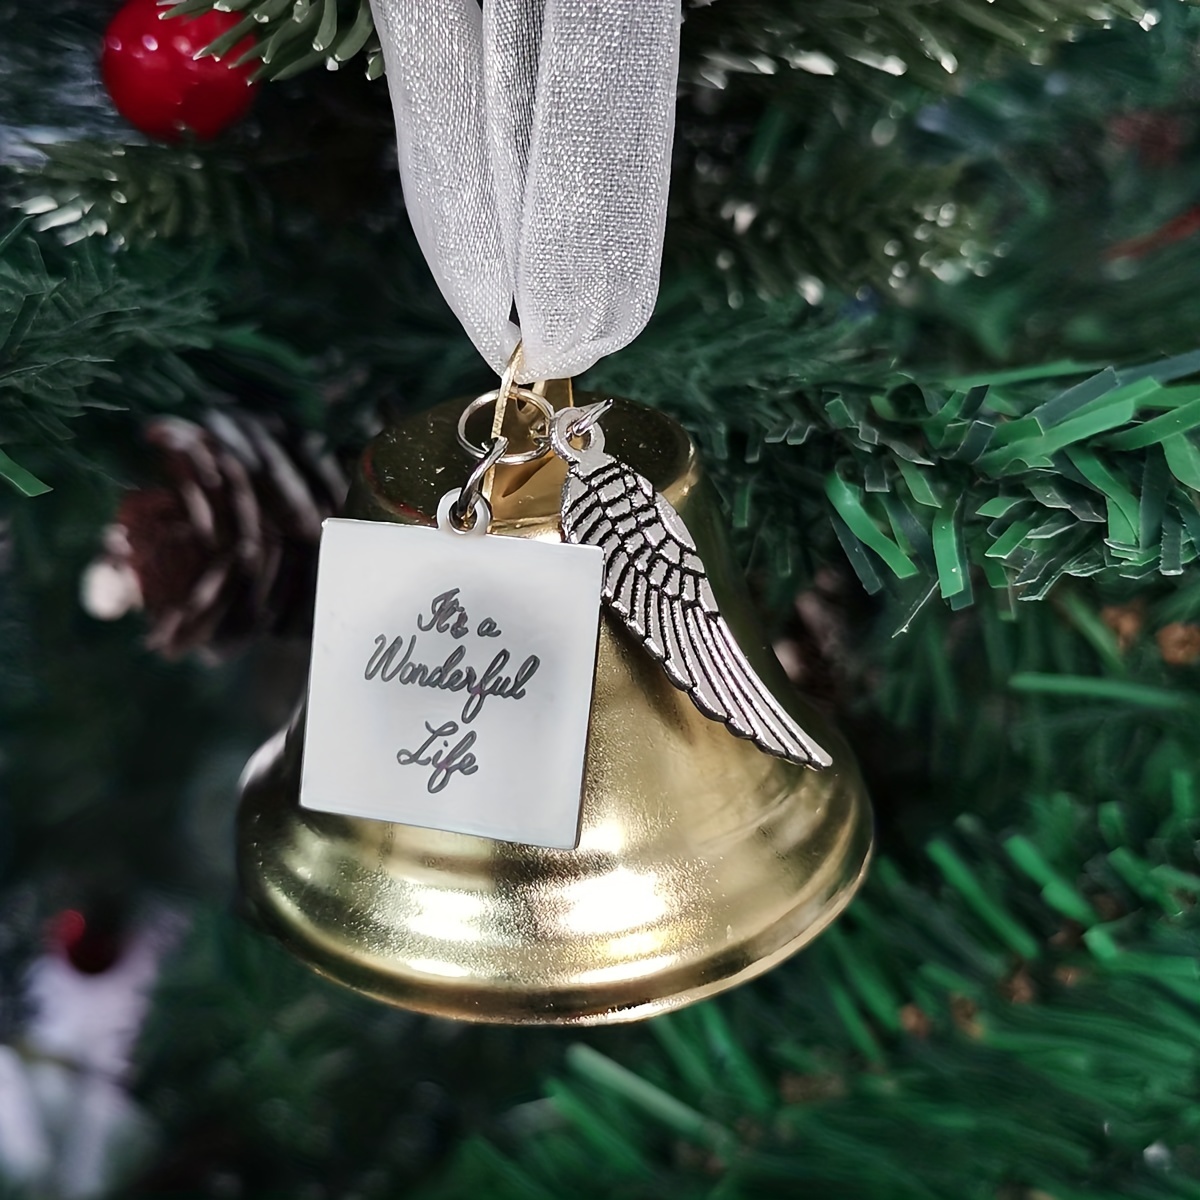 2Pcs Christmas Tree Ornaments xmas hanging bell Christmas Bell